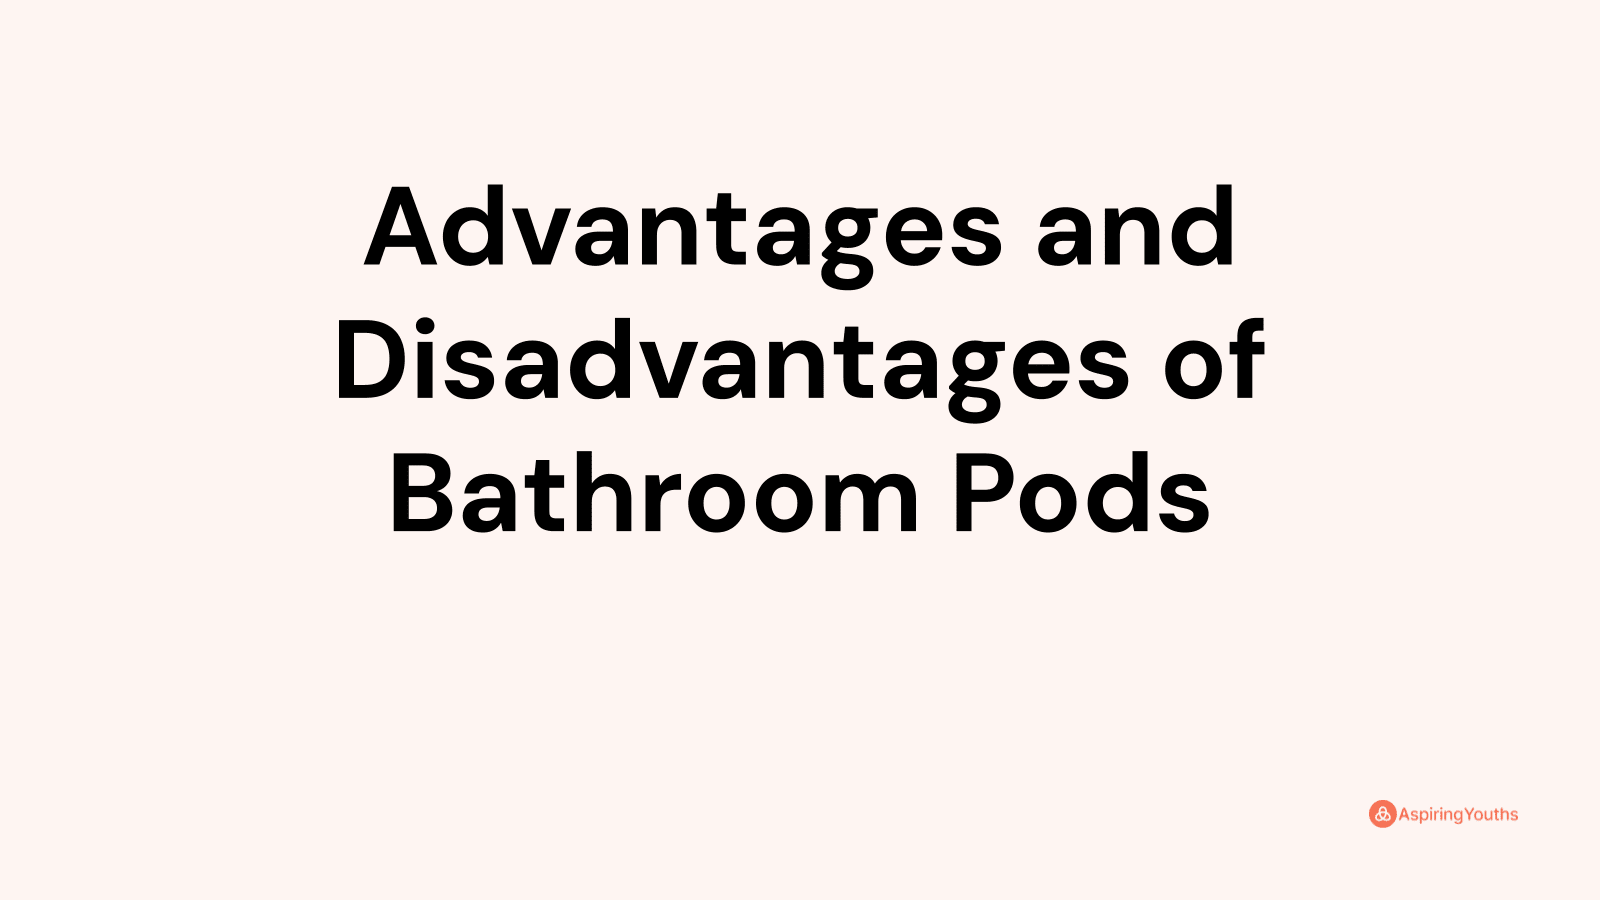 Advantages and disadvantages of Bathroom Pods